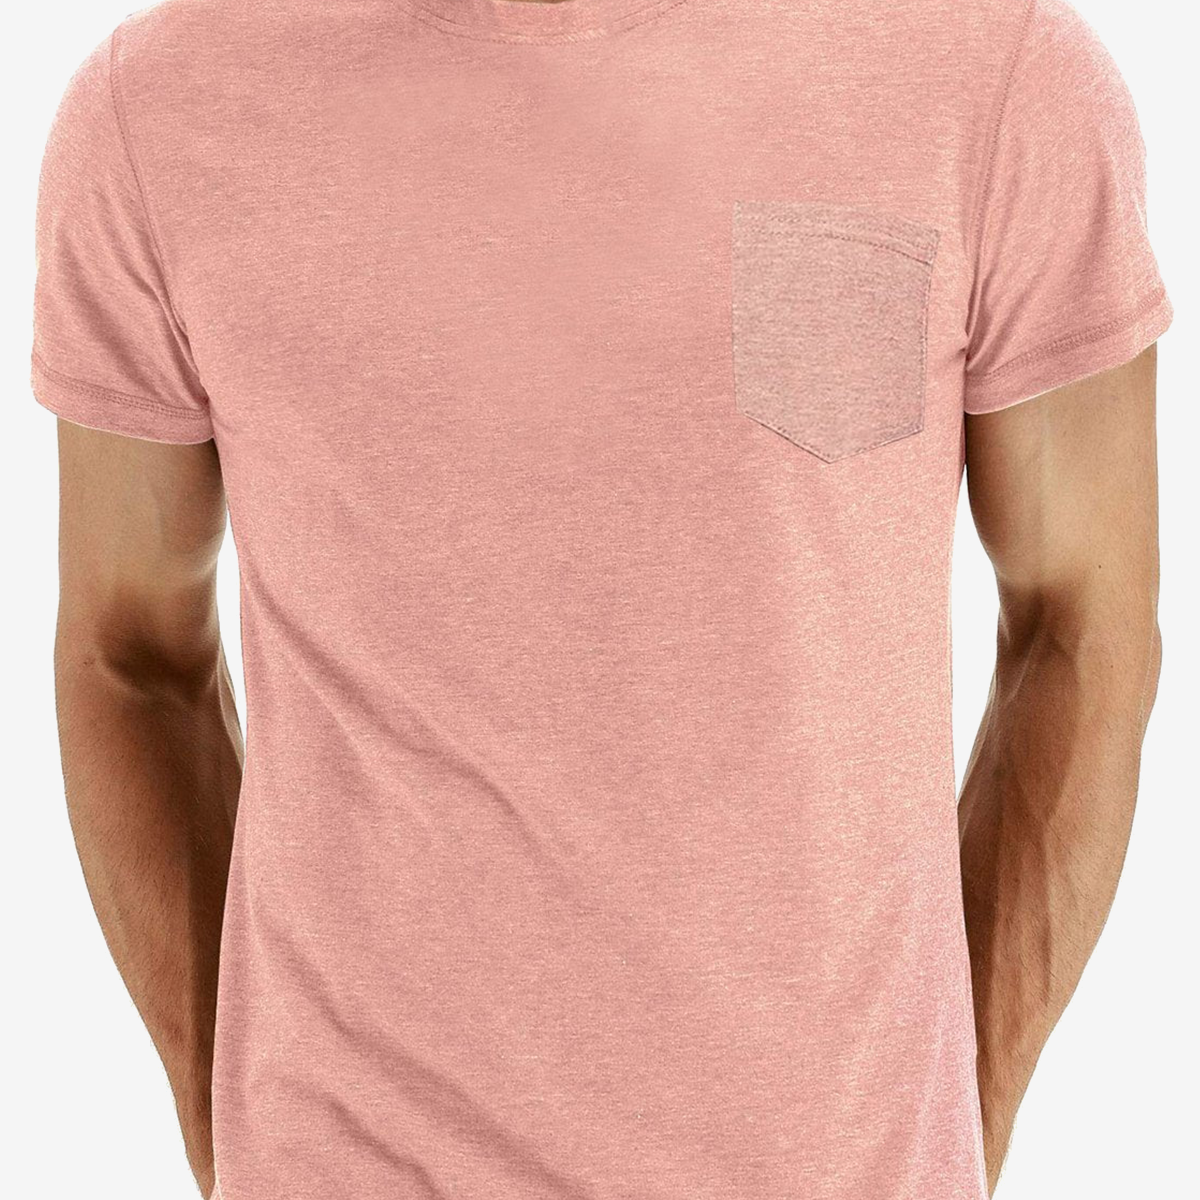 Men's Casual Solid Color Pocket Short Sleeve T-shirt